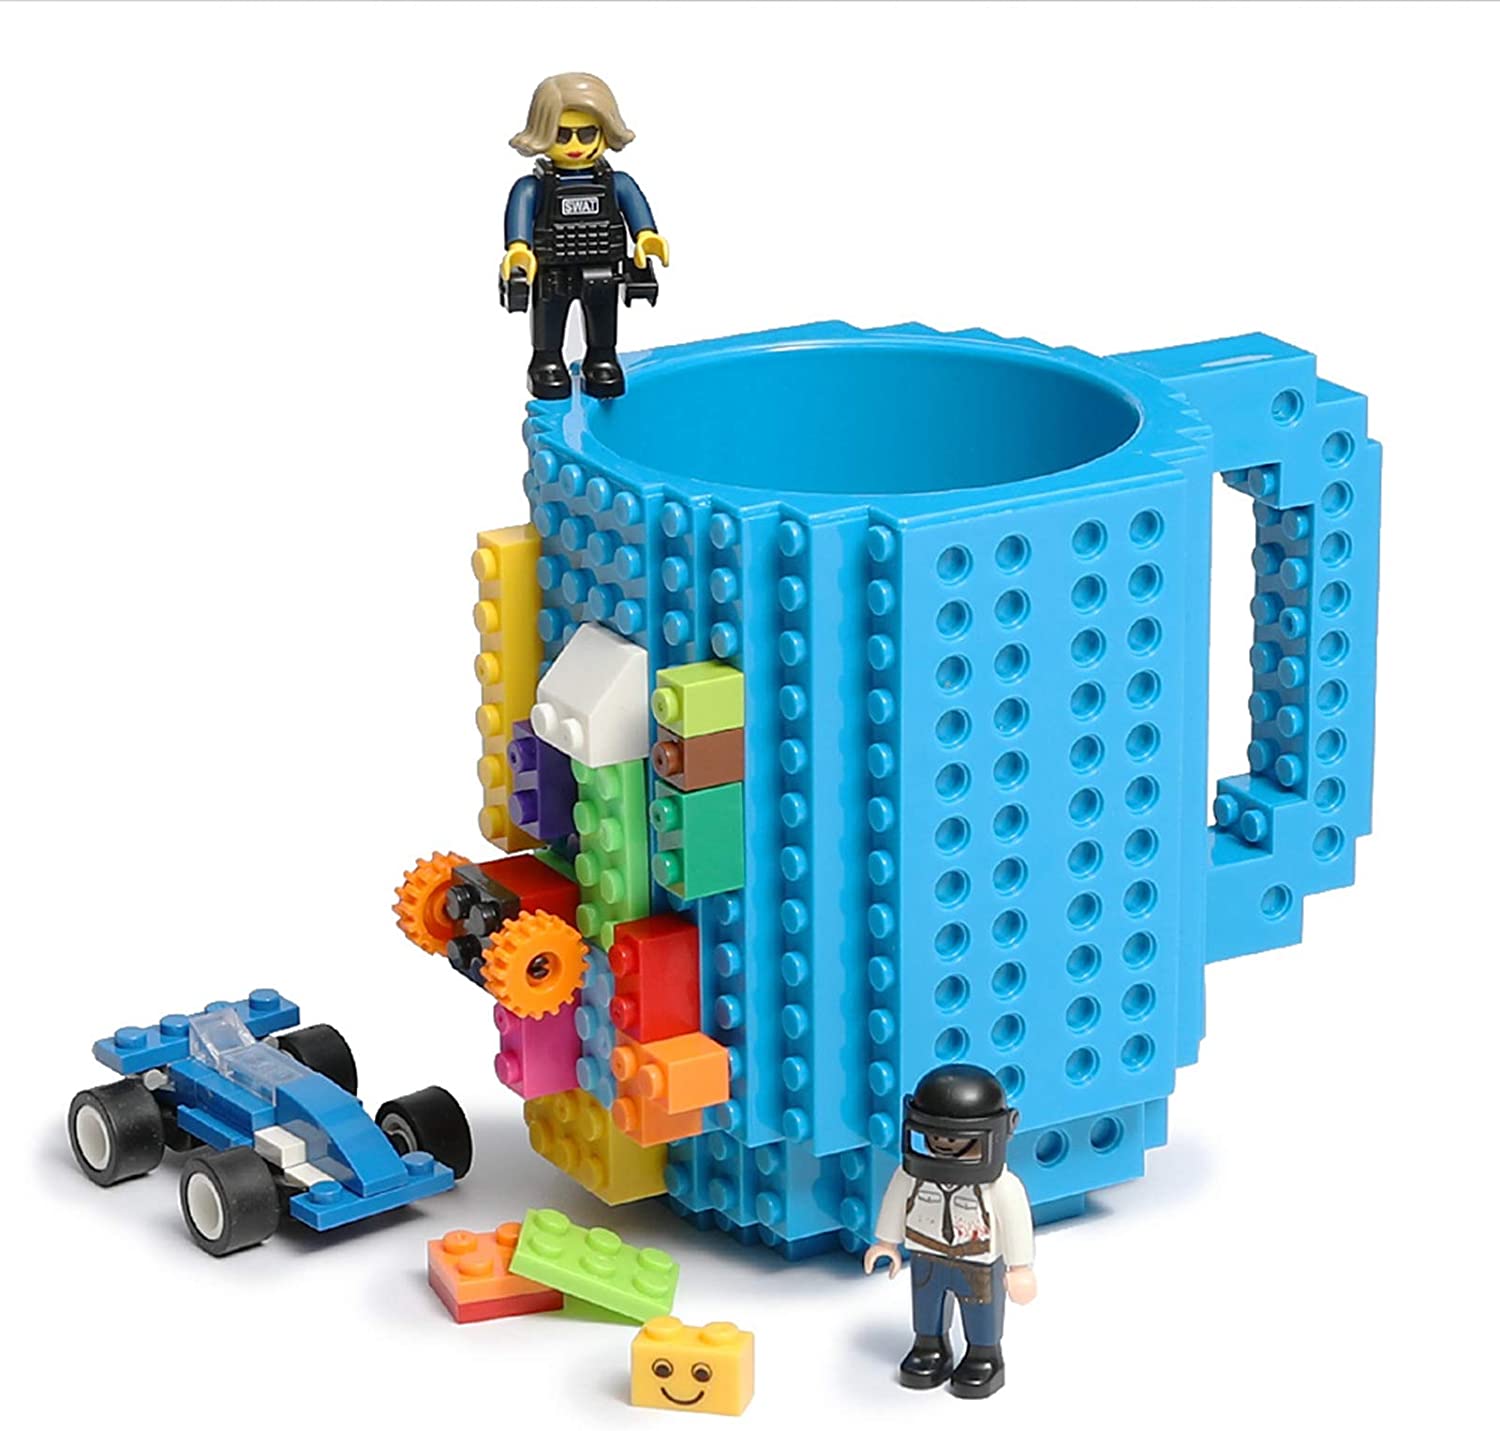 Lumsburry Build-On Brick Coffee Mug, Funny DIY Novelty Cup with Building Blocks Creative for Kids Men Women Xmas Birthday (Cool Black)